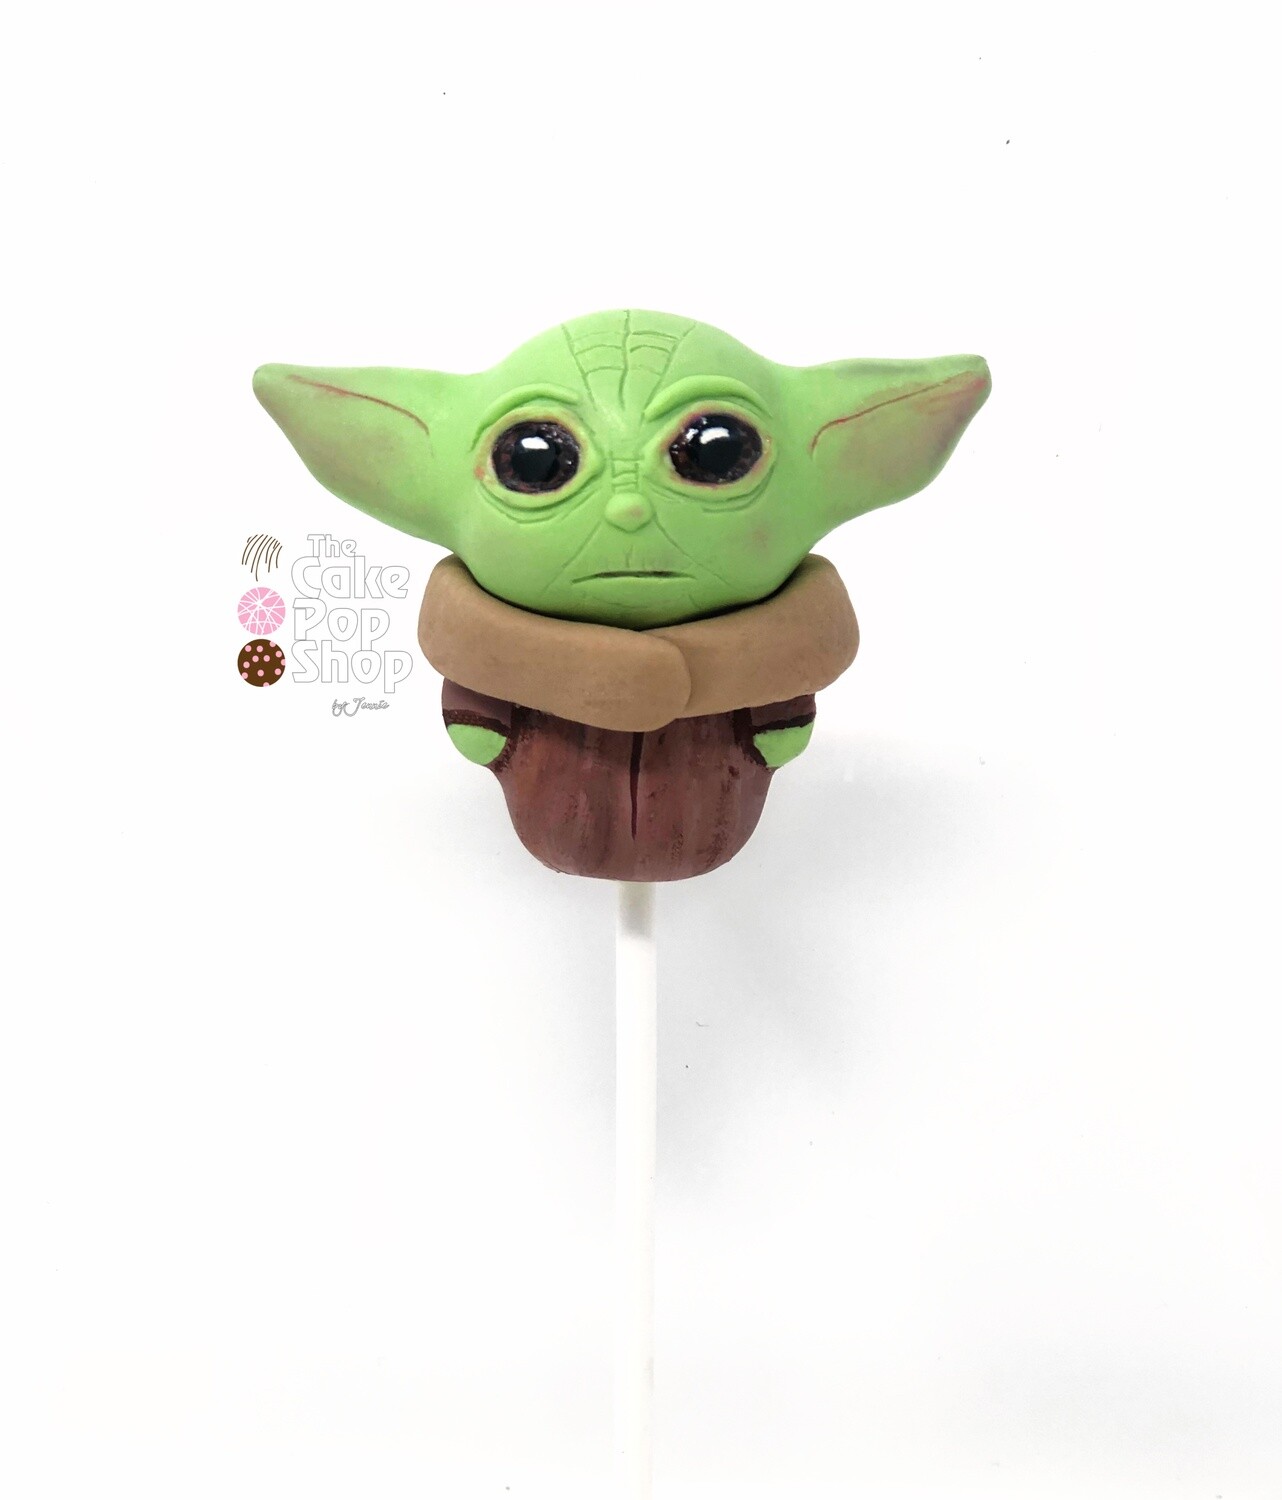 Baby Yoda advanced cake pop class